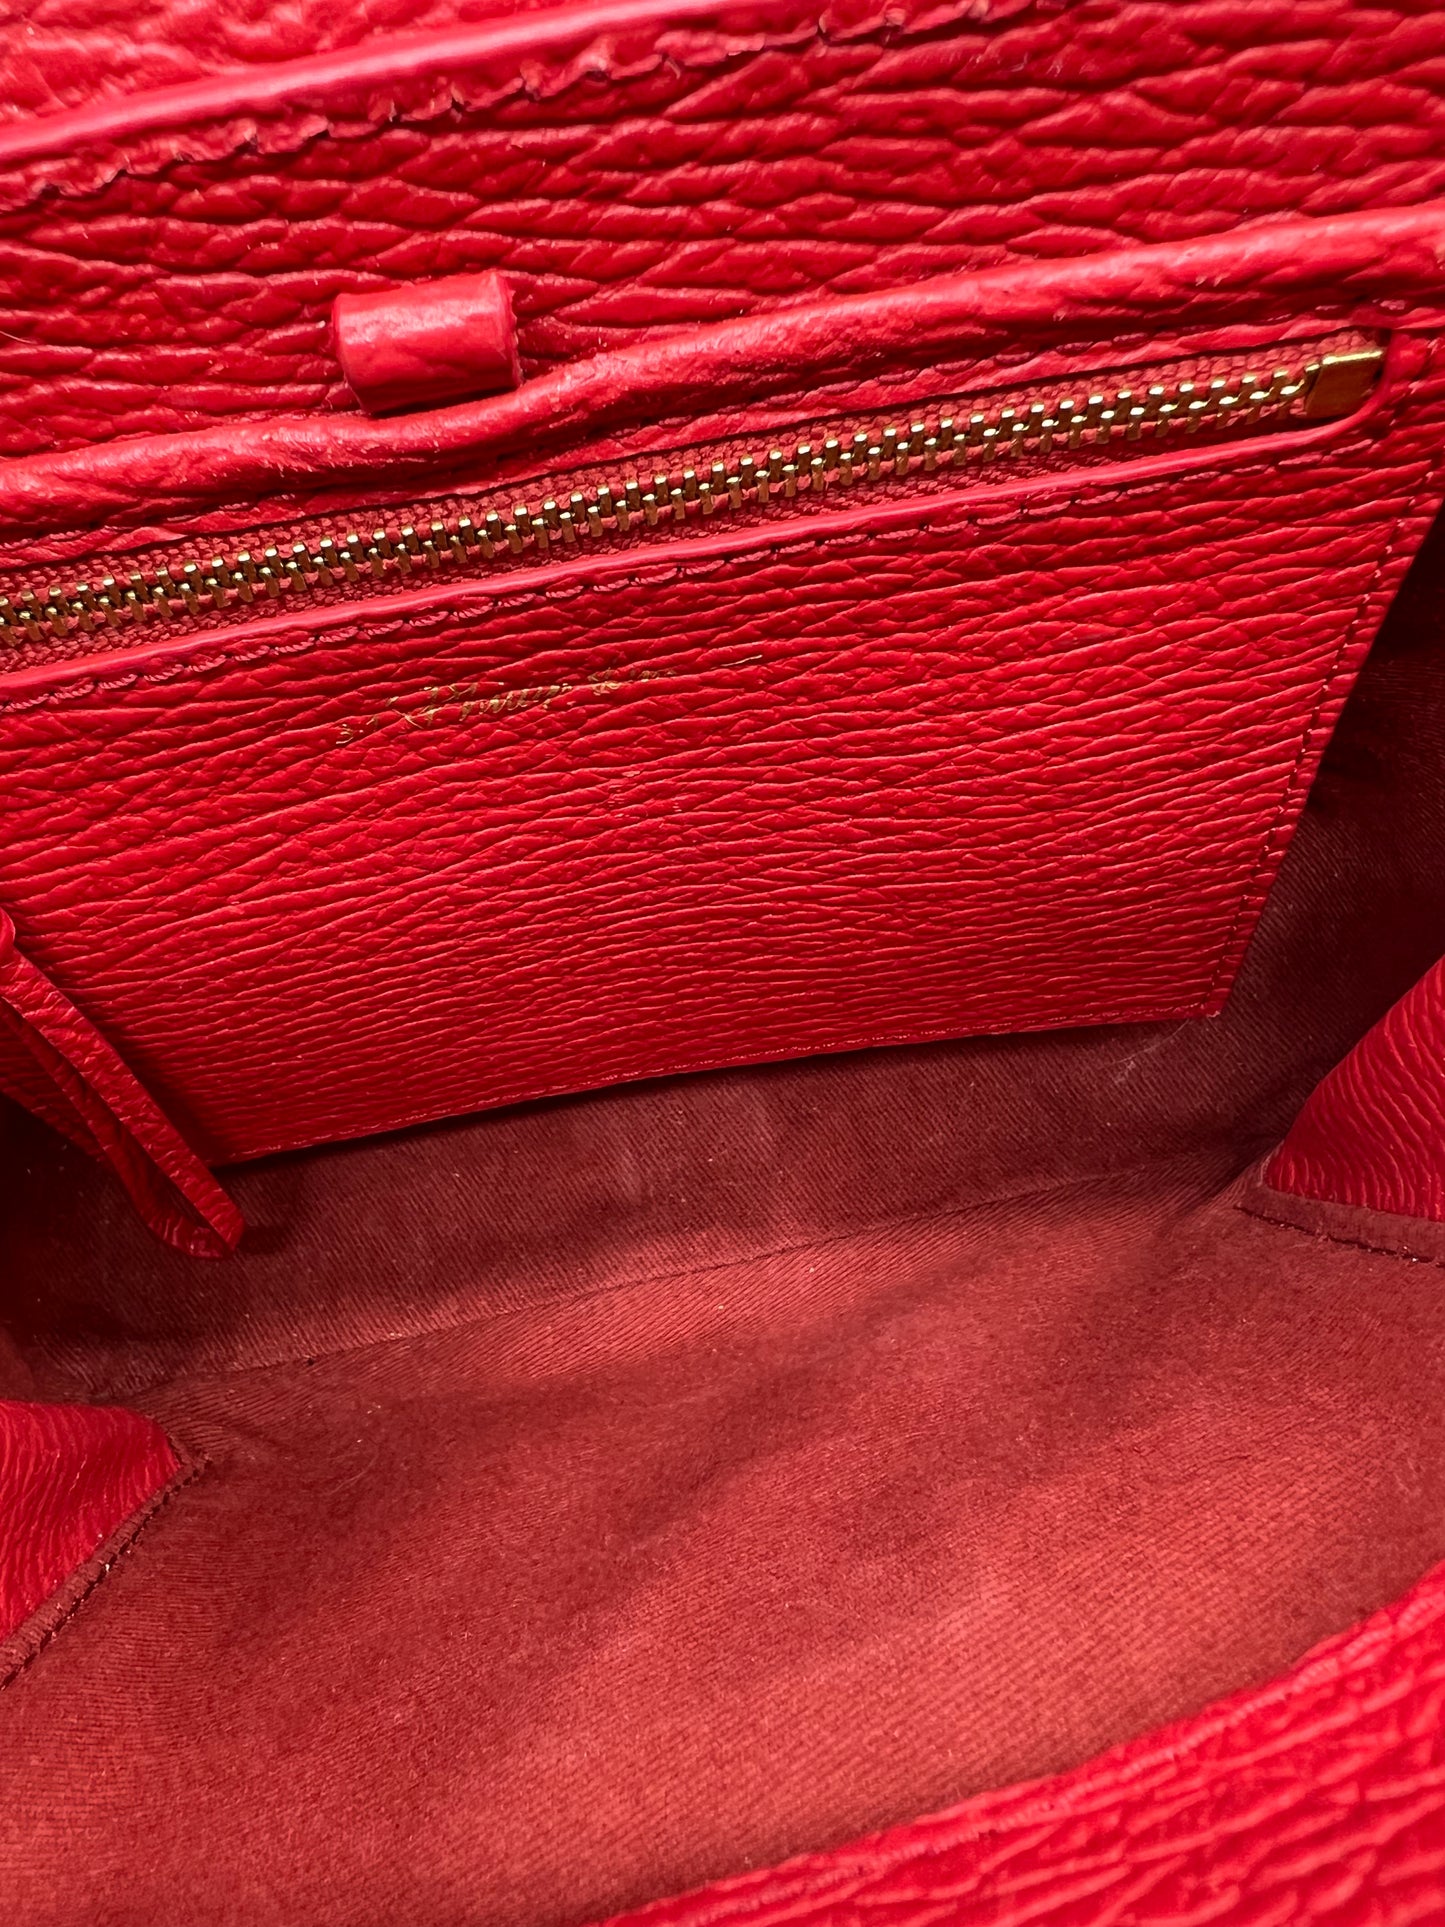 Phillip Lim Red Leather Mini Pashli Shoulder Bag